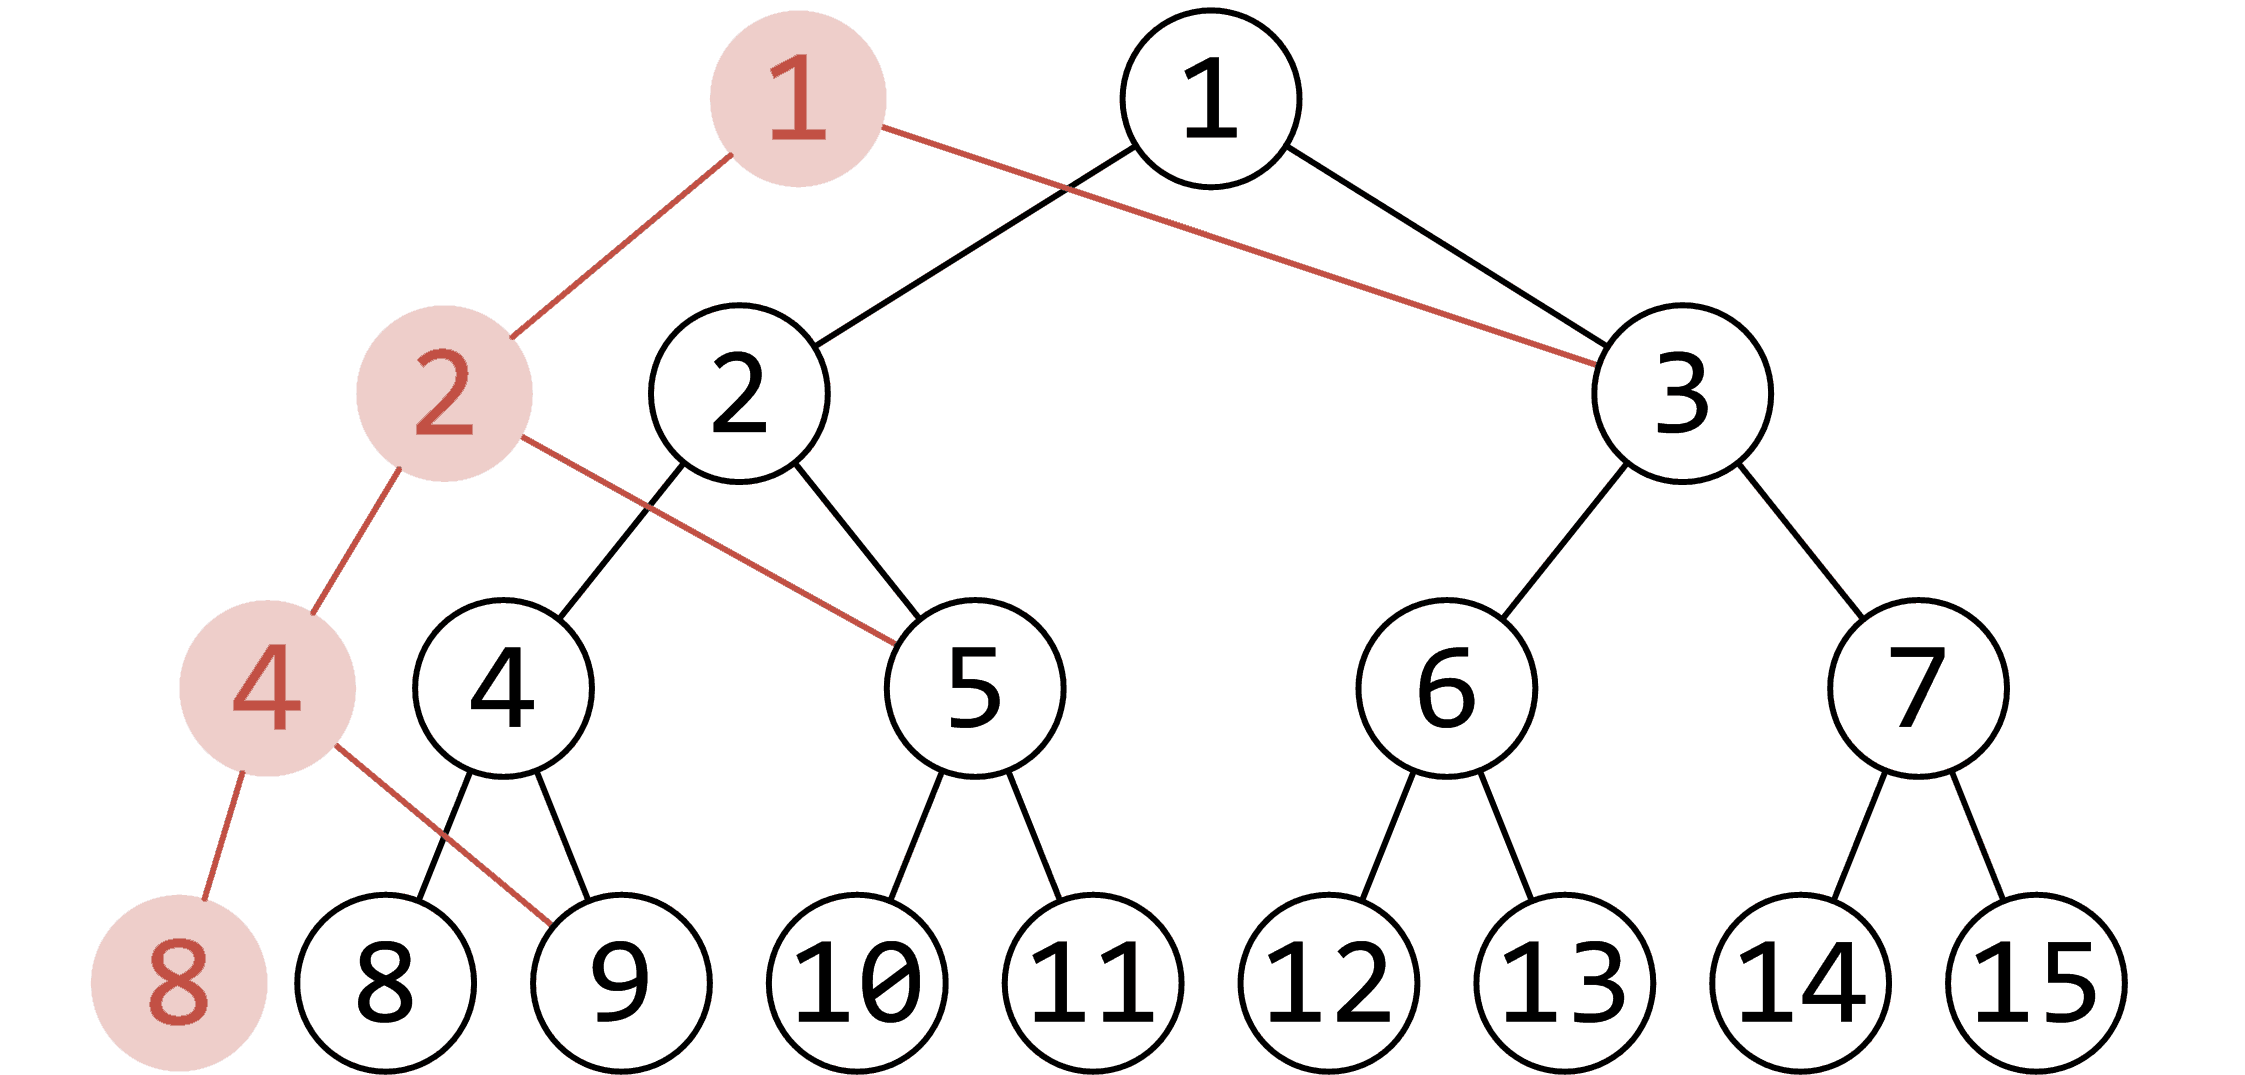 persistent_segment_tree